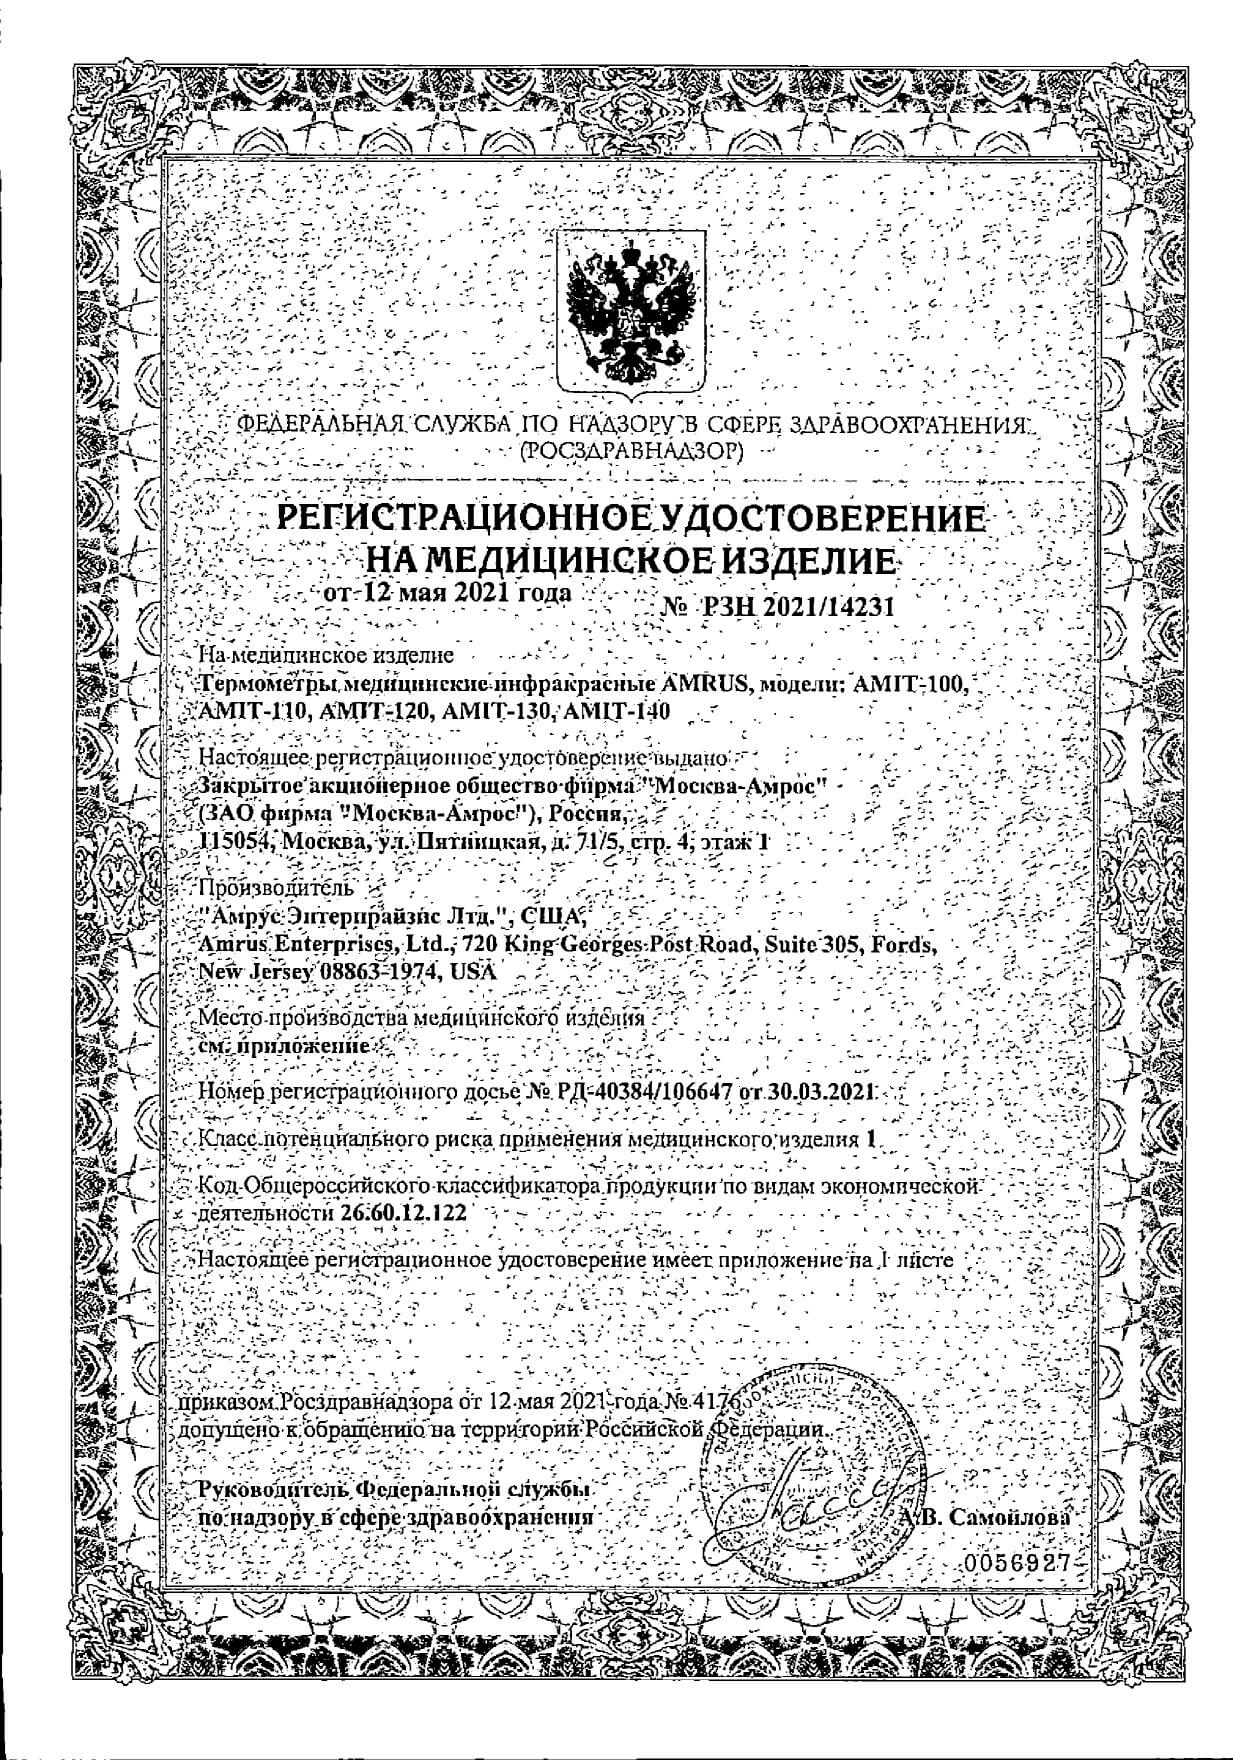 Термометр медицинский инфракрасный AMIT-120 Amrus/Амрус: сертификат